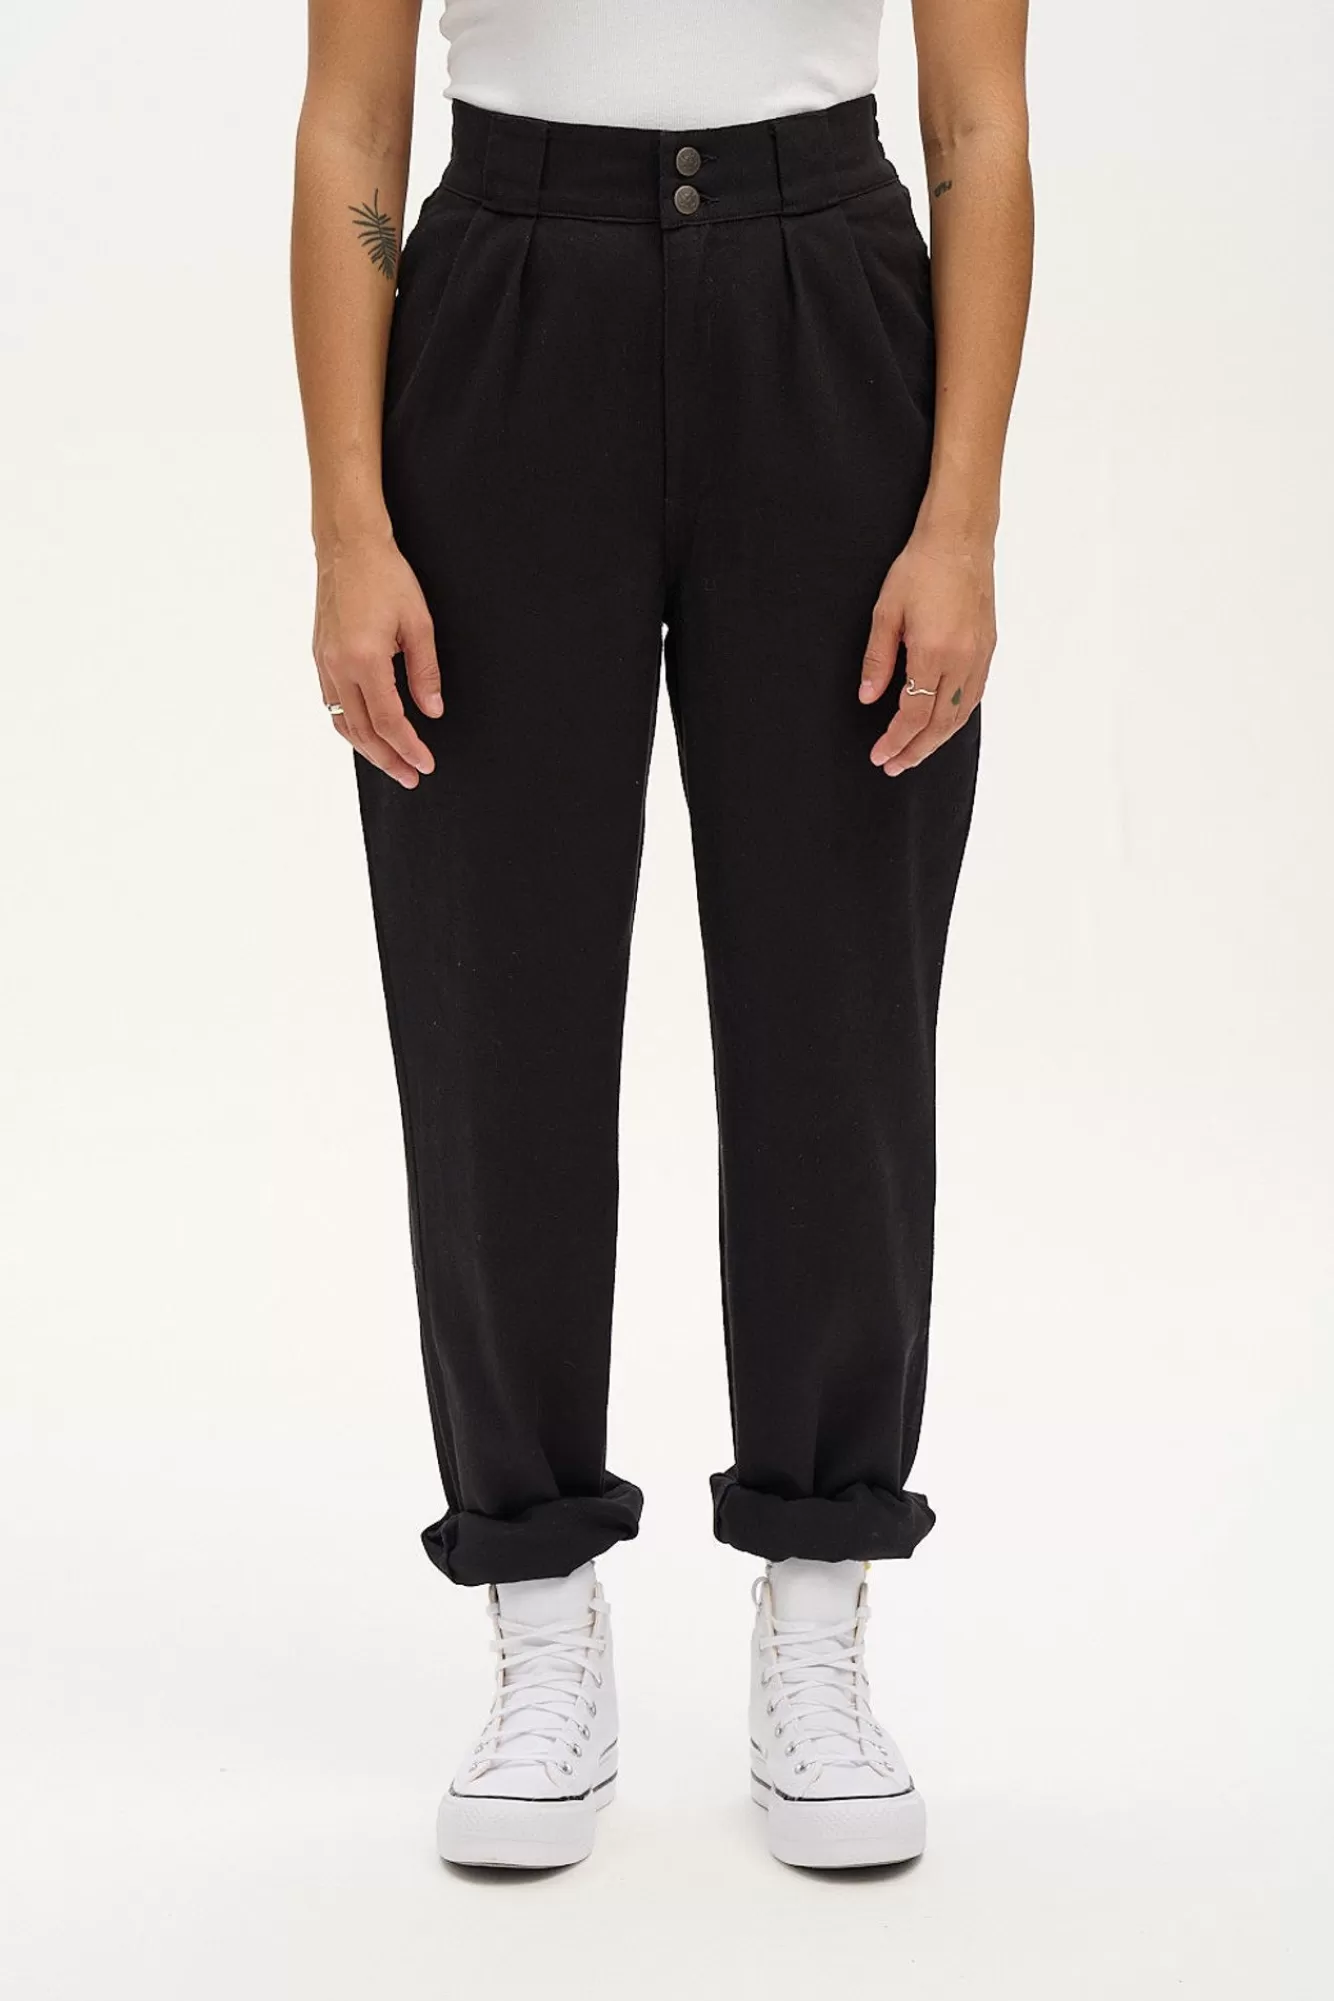 Addison Tapered Jeans: Organic Twill - Black-Lucy & Yak Fashion